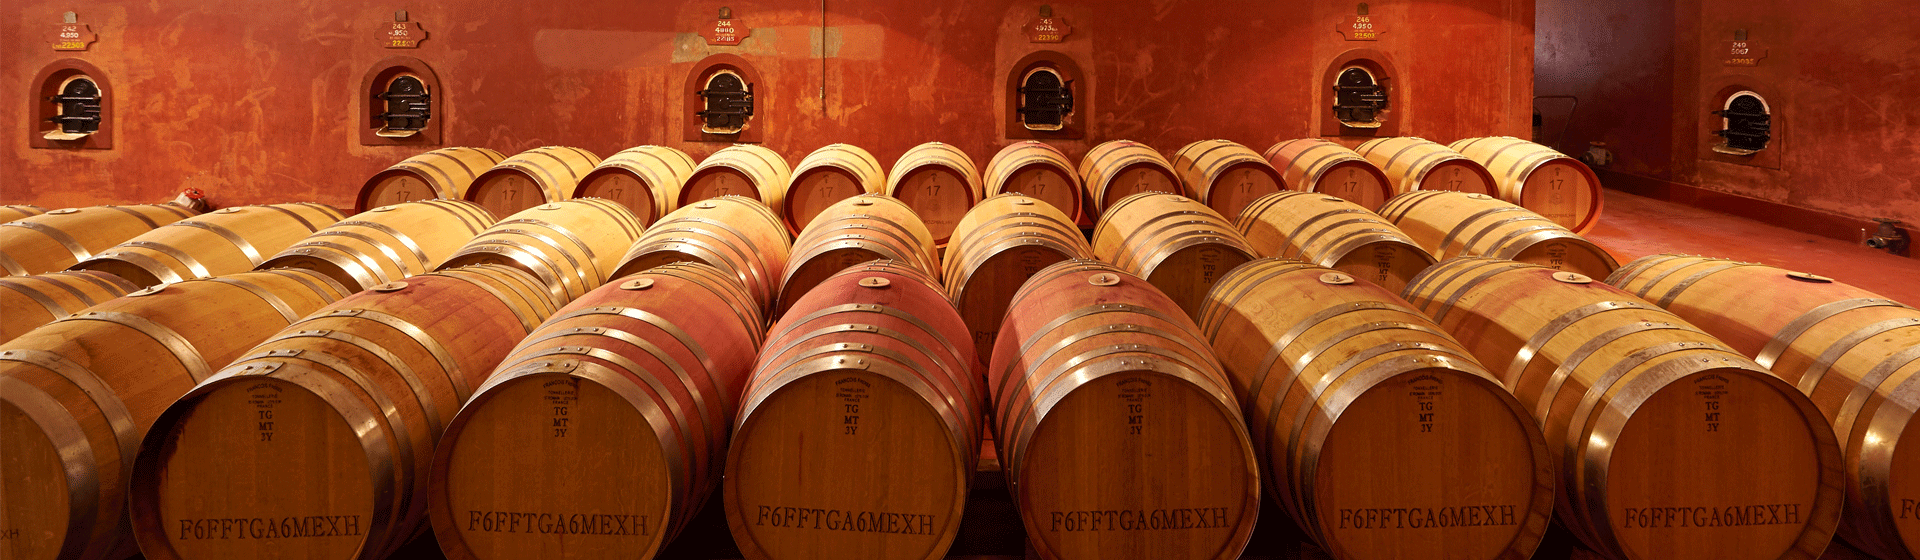 Rows of barrels in Magill Estate